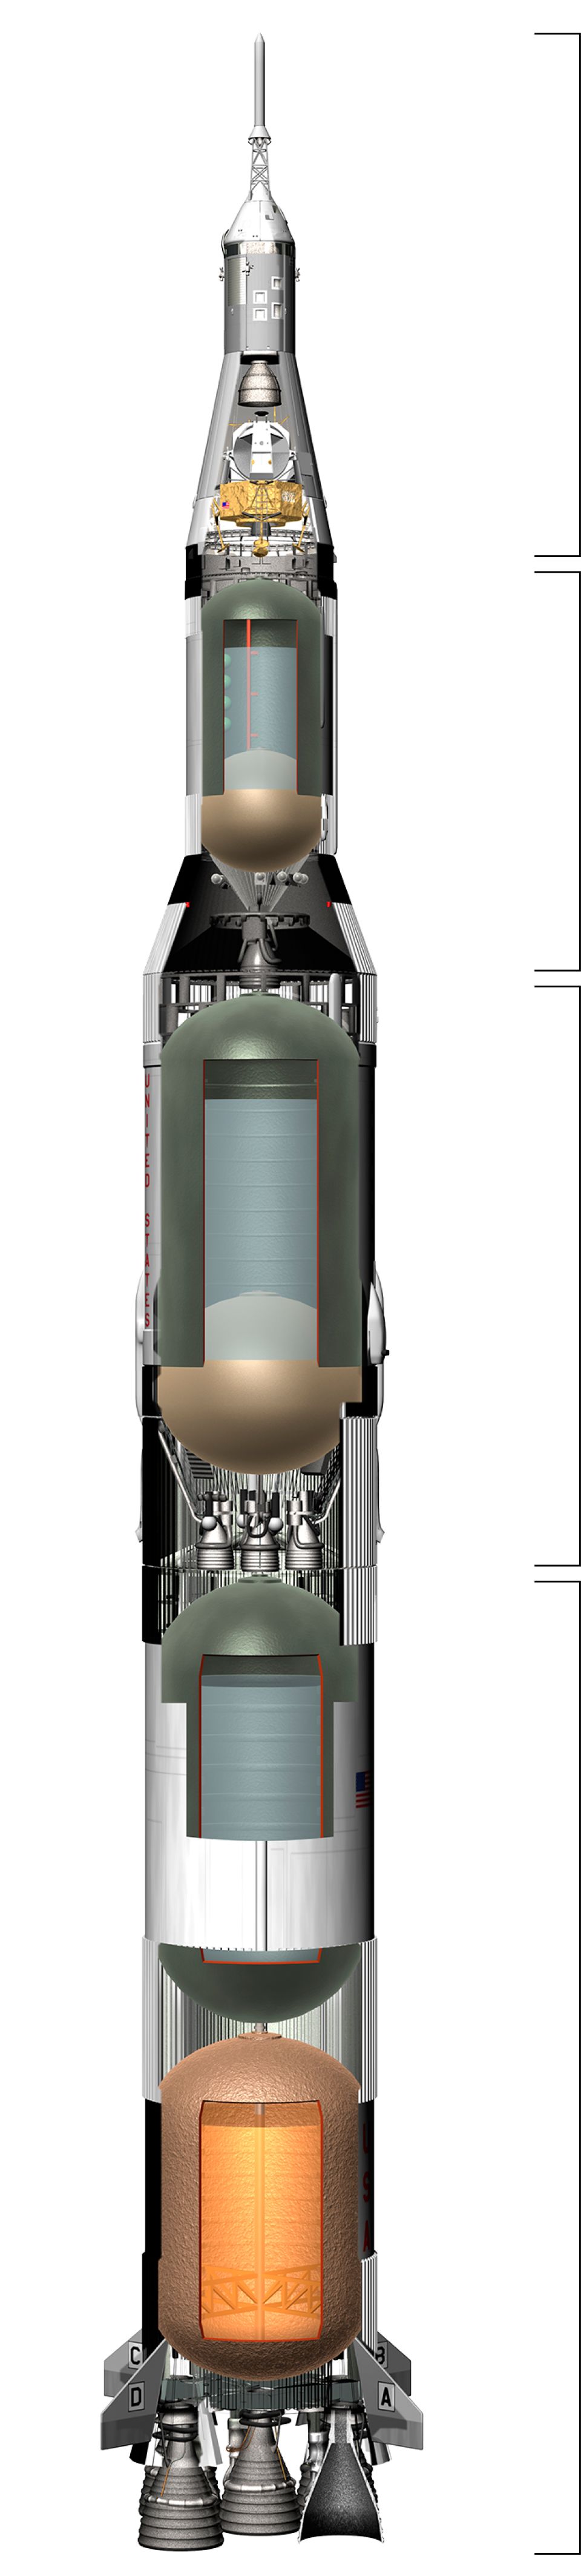 5 Rocket Facts | Saturn 5 Rocket Parts | Find Out